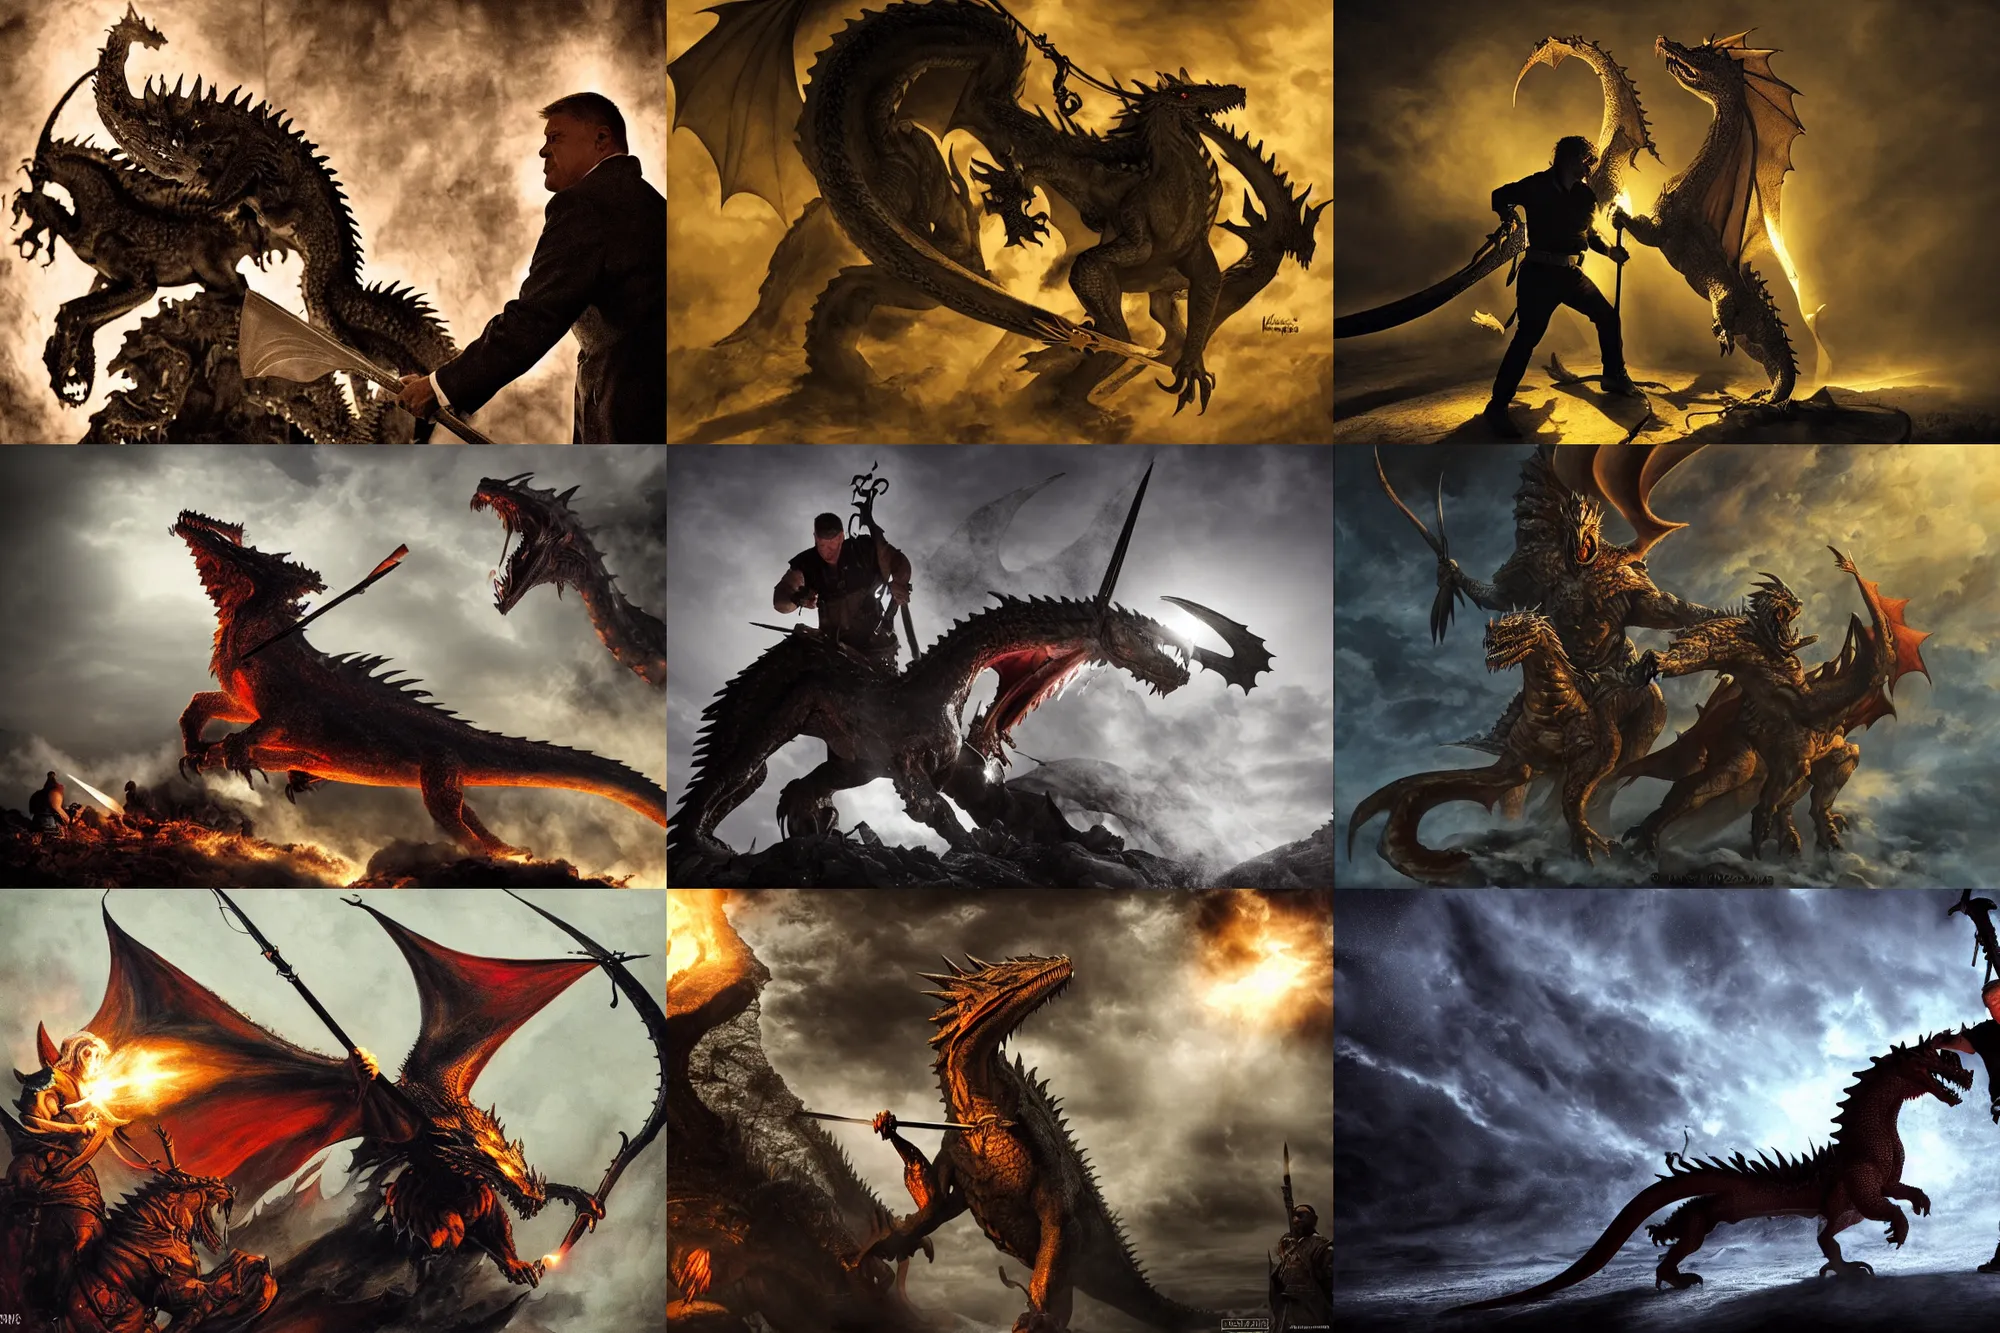 Prompt: Klaus Iohannis slaying a dragon, dramatic lighting